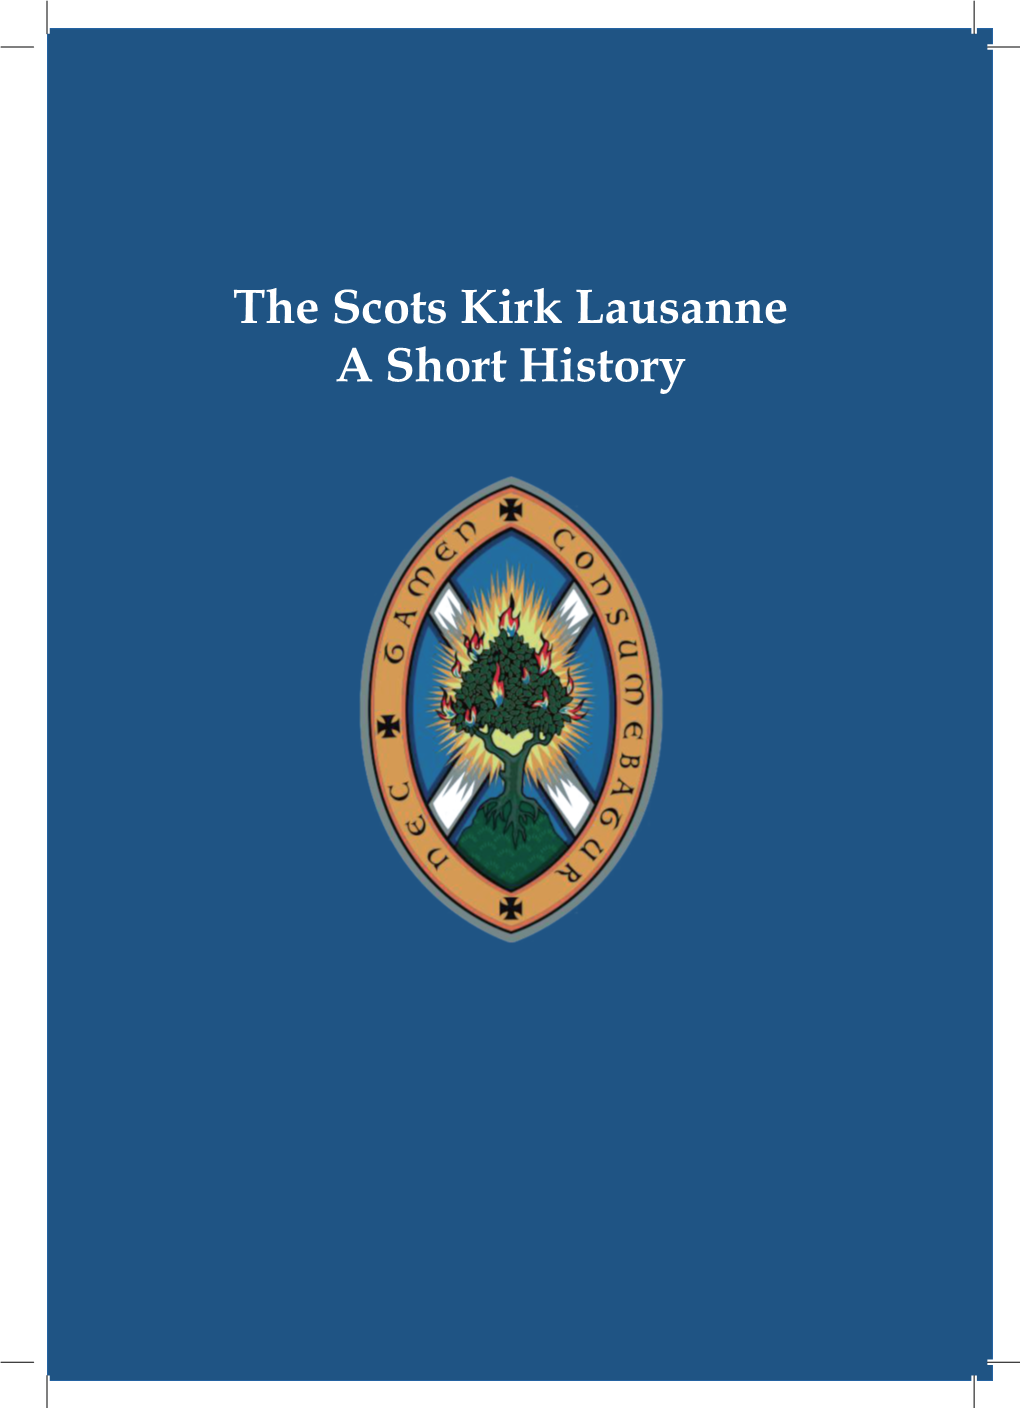 The Scots Kirk Lausanne a Short History